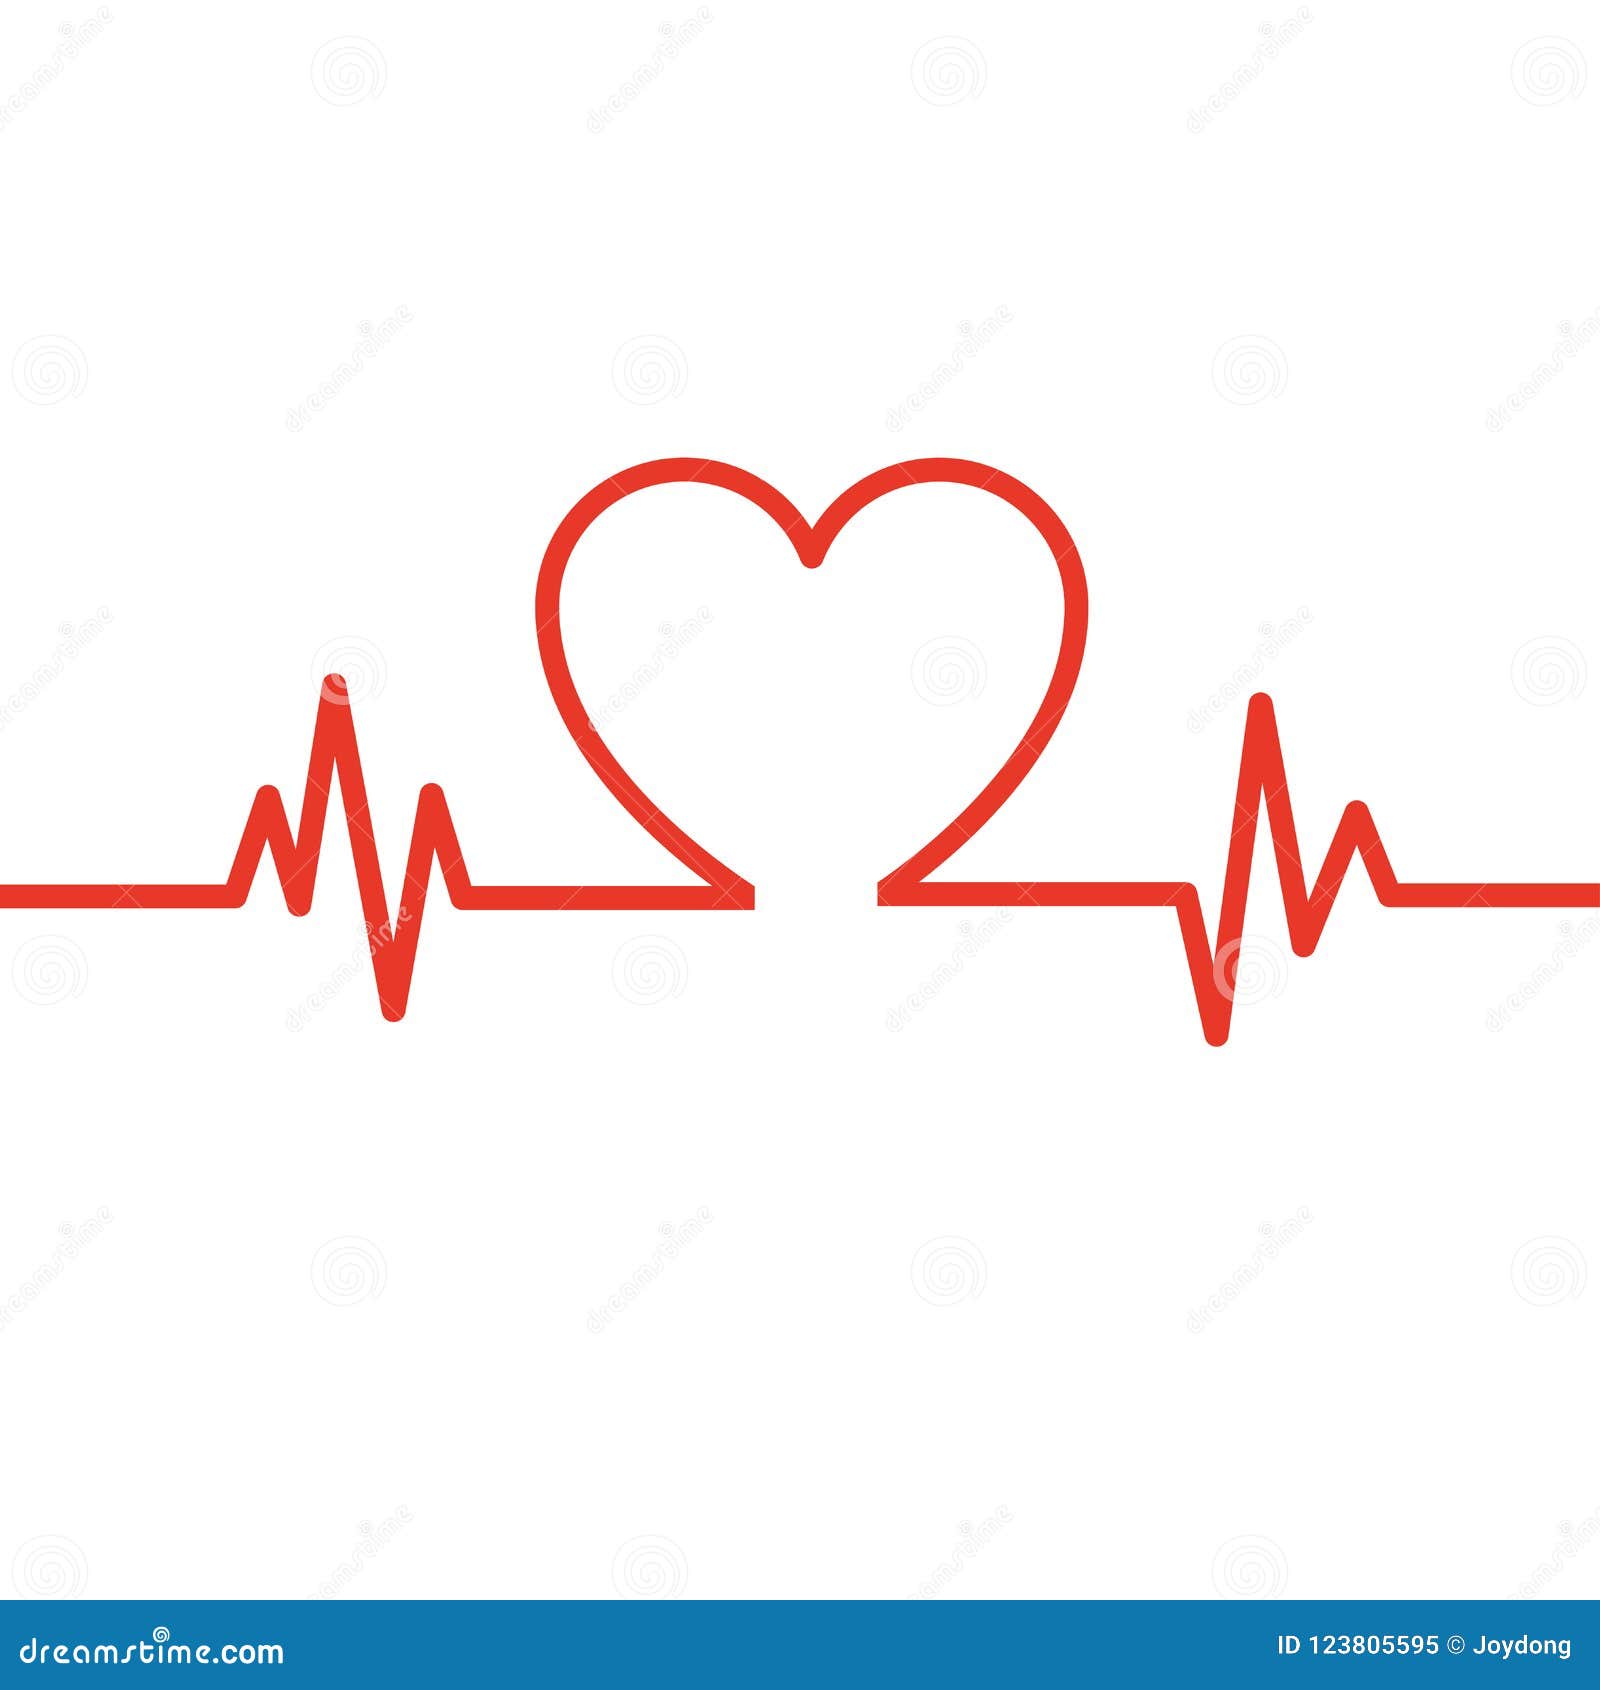 heart beat. cardiogram. cardiac cycle. medical icon.